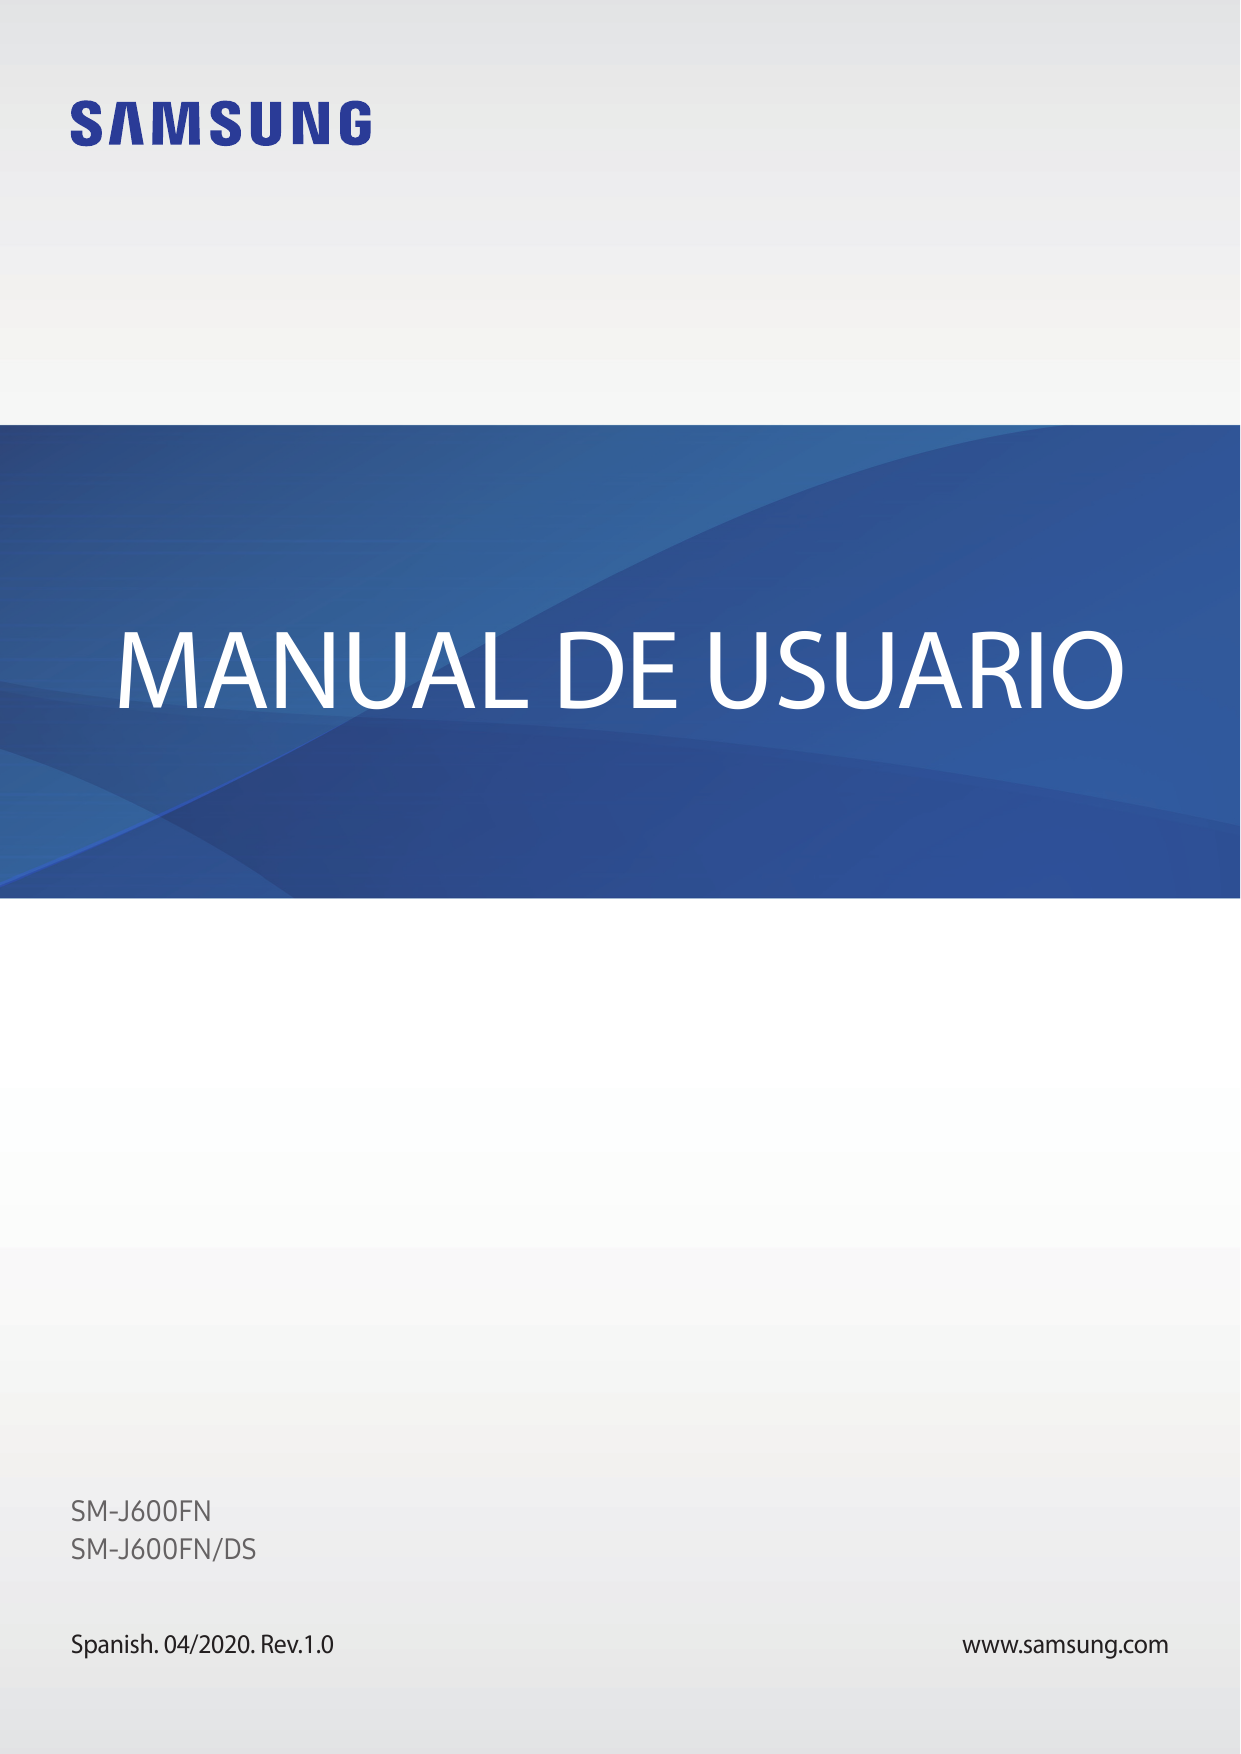 MANUAL DE USUARIOSM-J600FNSM-J600FN/DSSpanish. 04/2020. Rev.1.0www.samsung.com